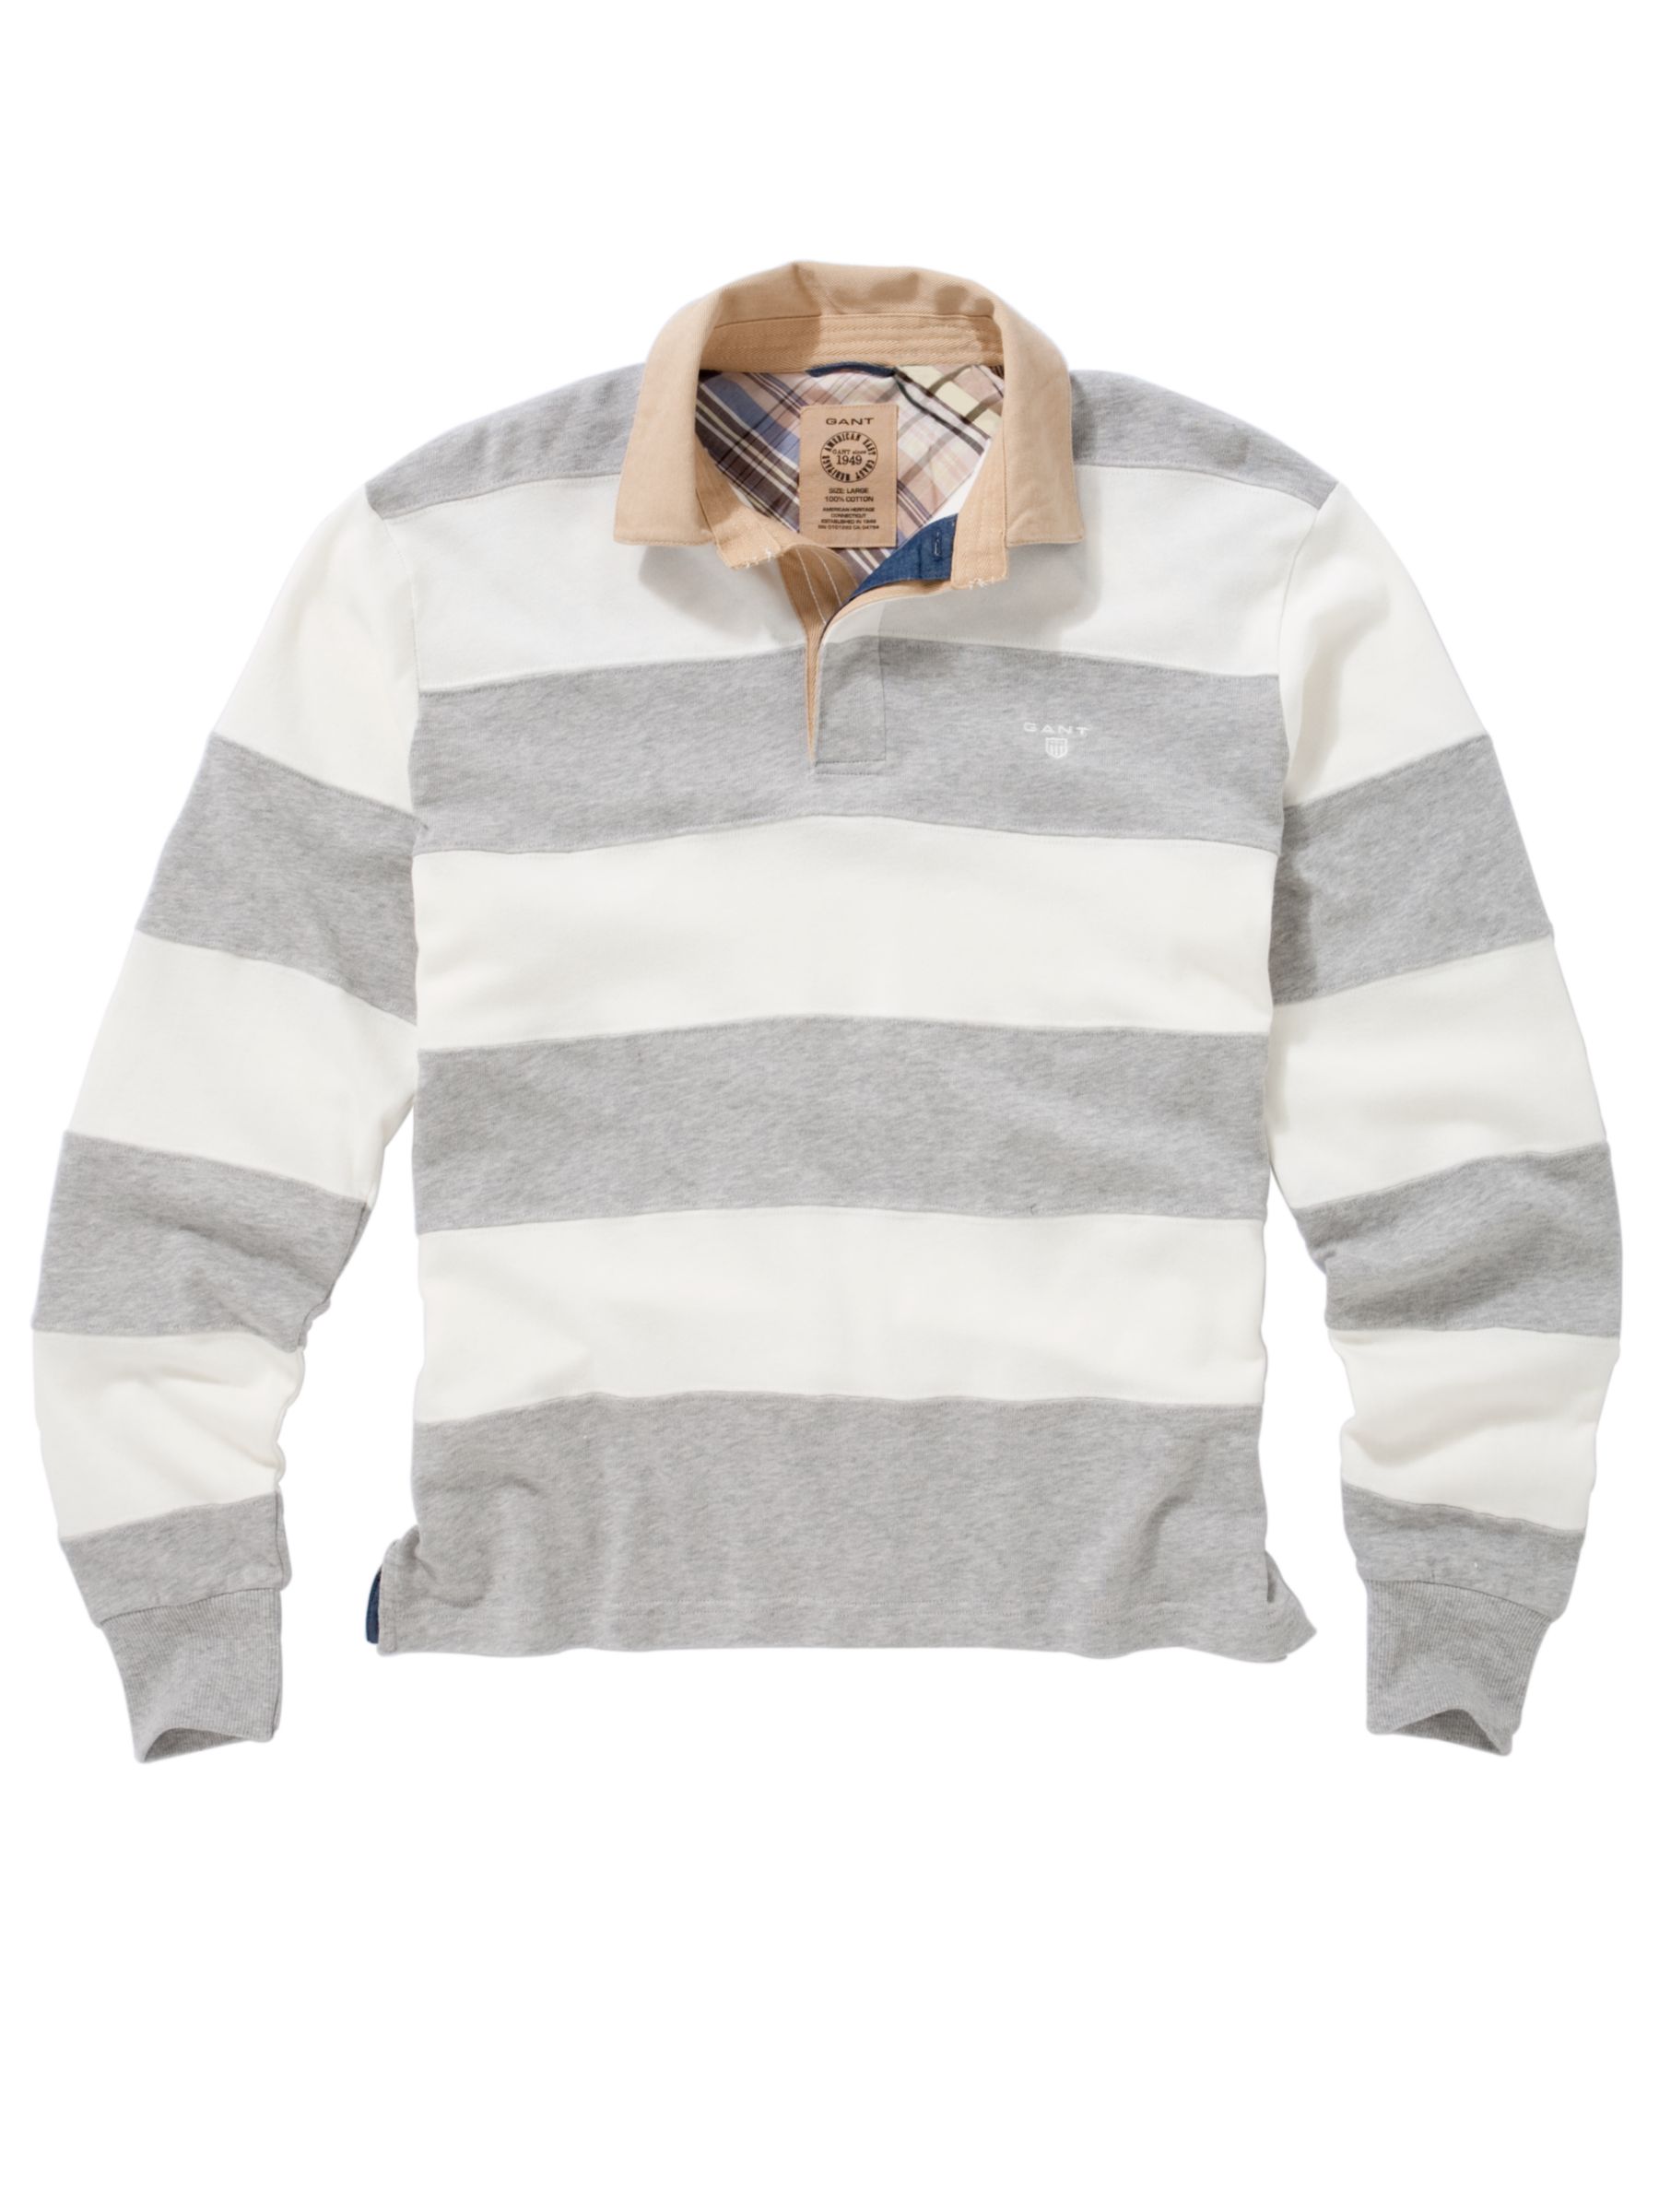 Gant Pieced Block Stripe Rugby Shirt, Grey